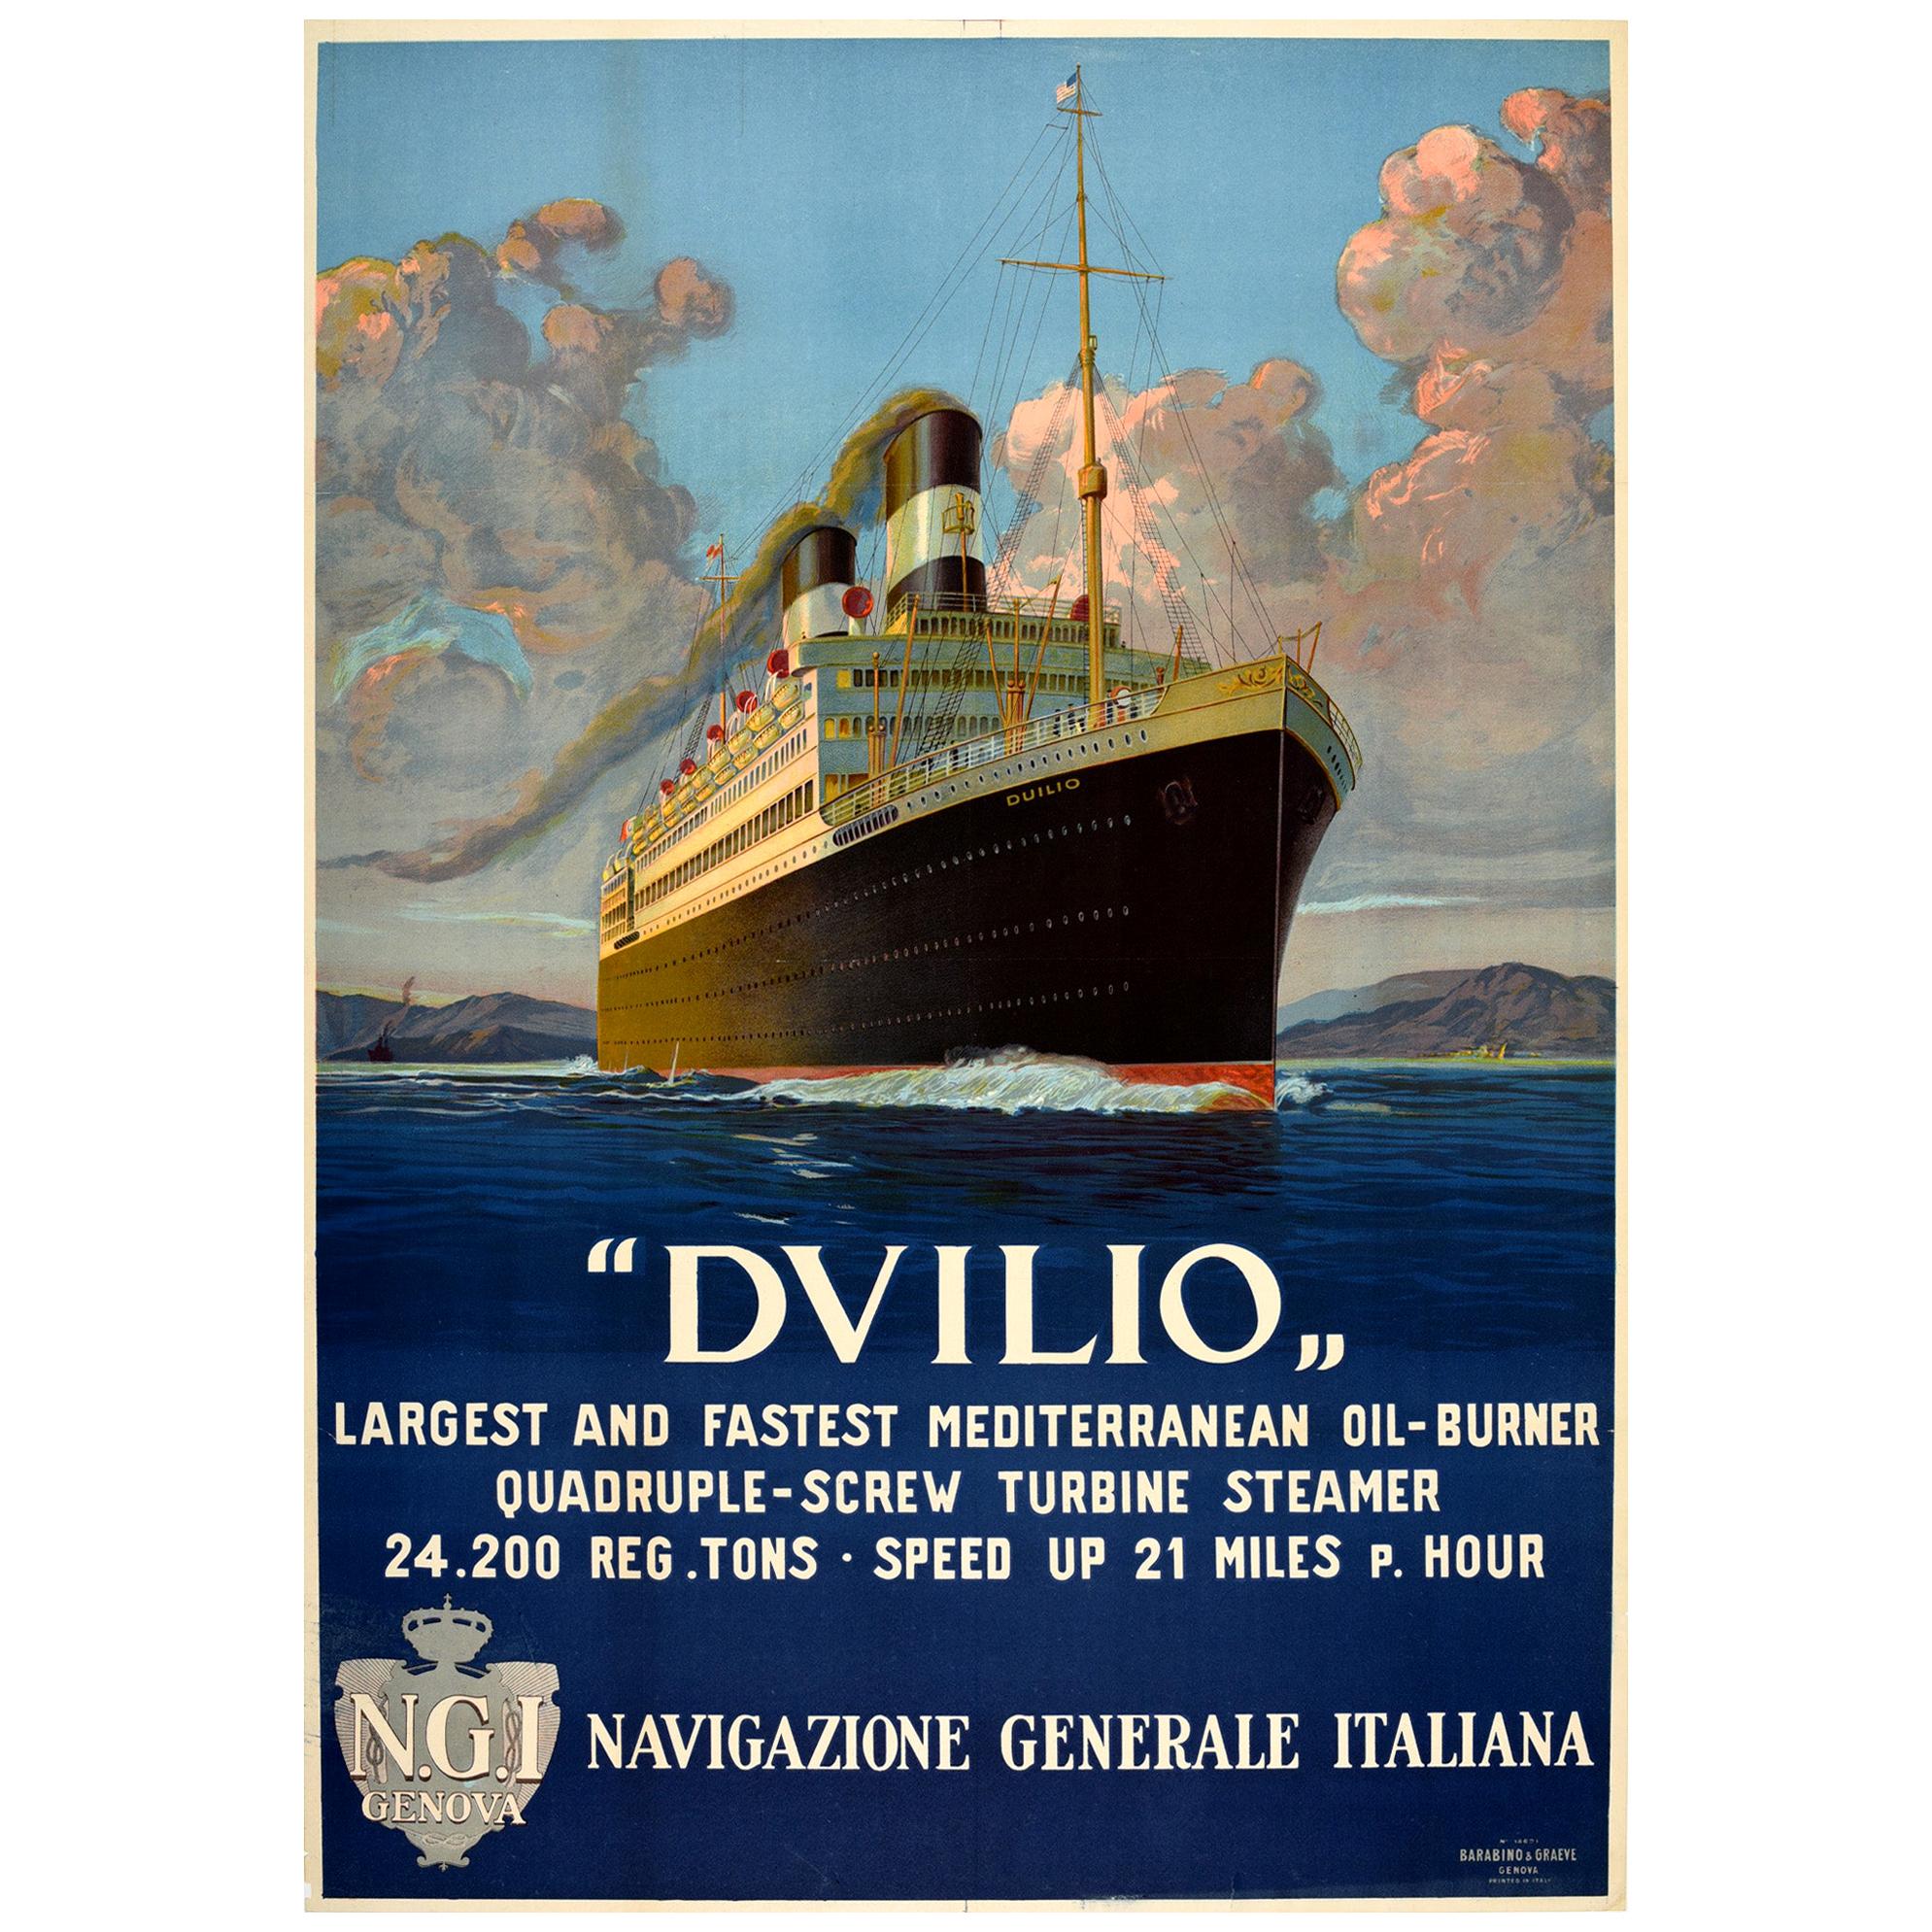 Original Vintage Travel Poster SS Duilio Transatlantic Ocean Liner Mediterranean